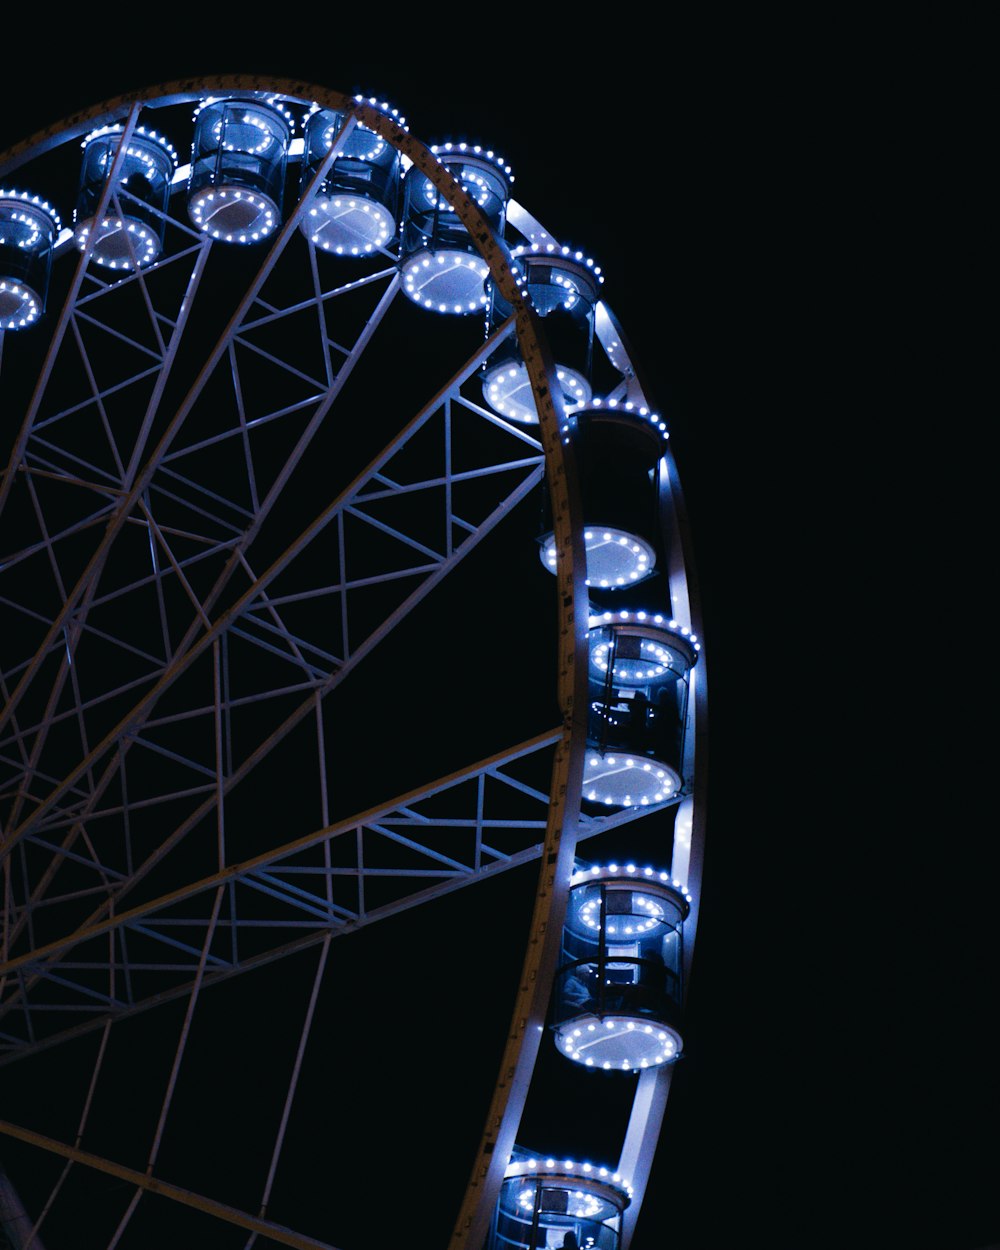 a ferris wheel lit up with blue lights